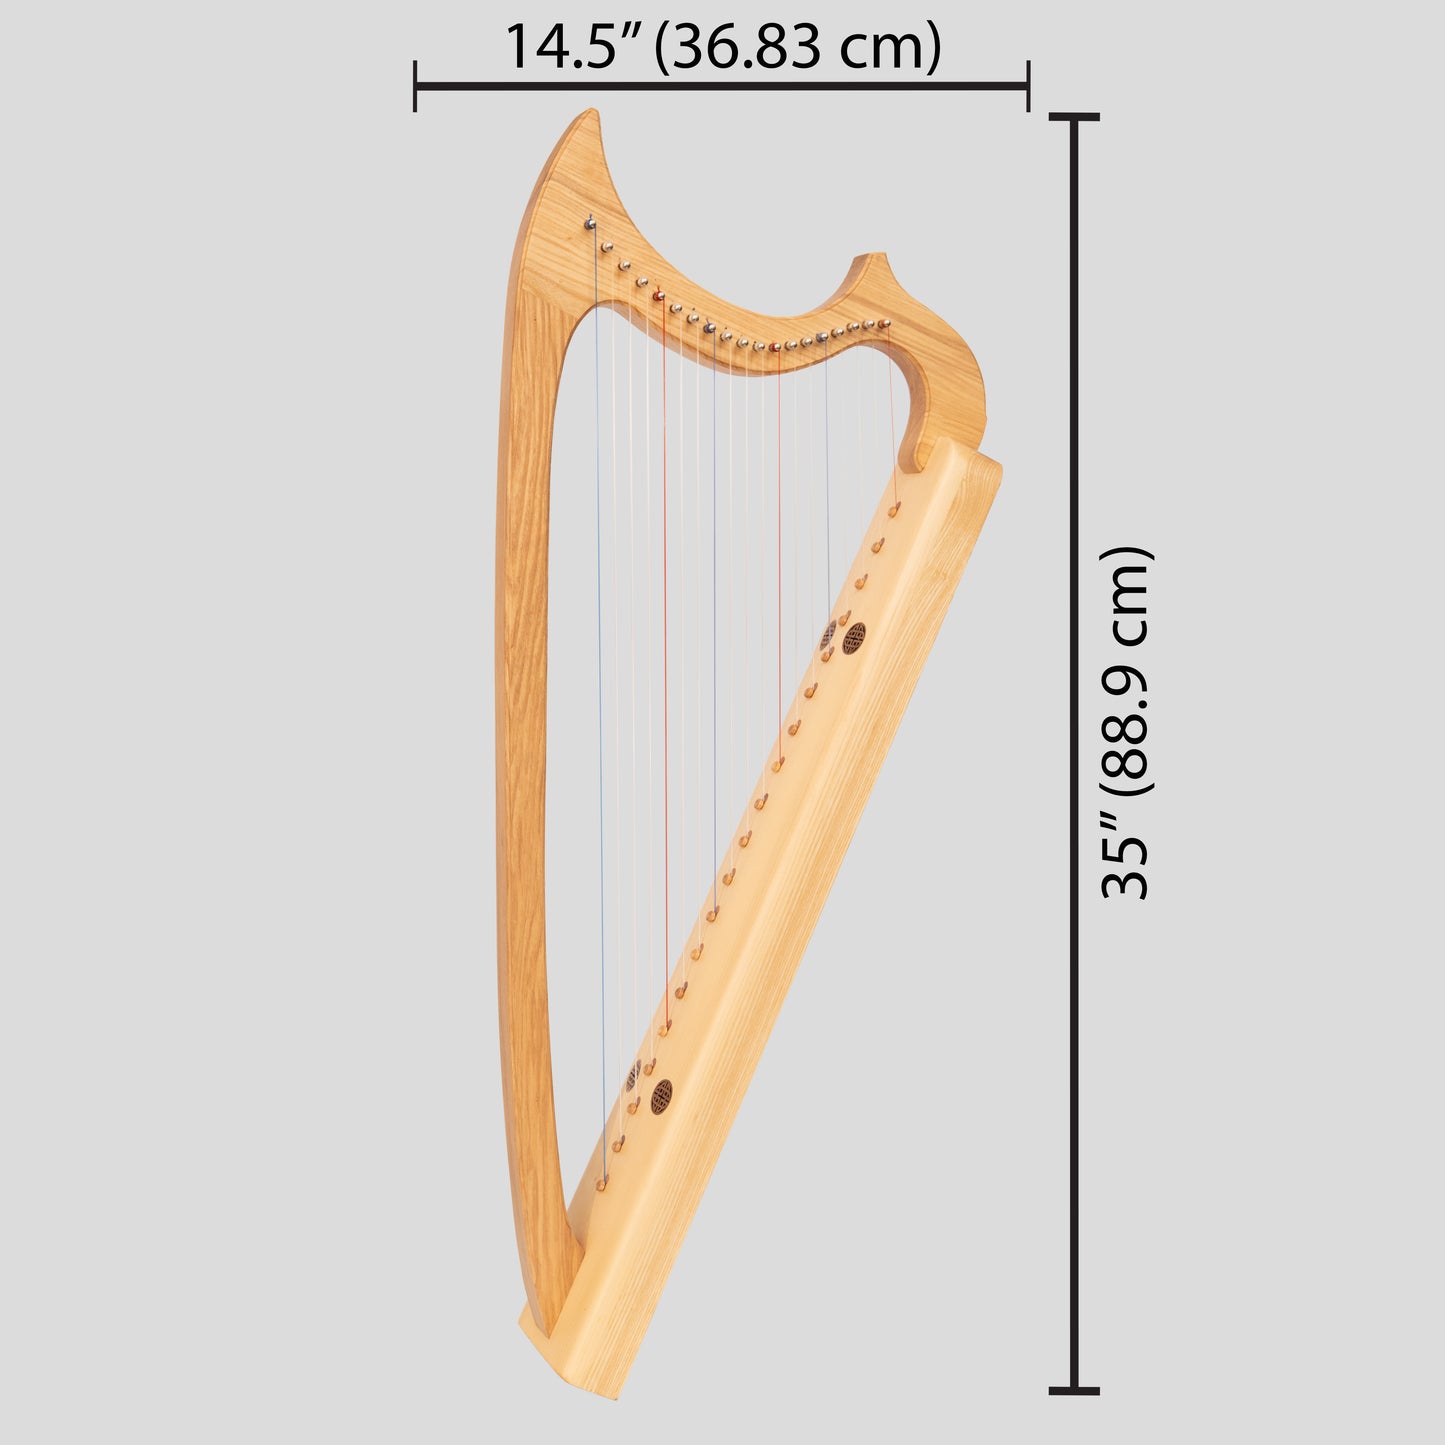 Muzikkon Gothic Harp 19 String Ashwood